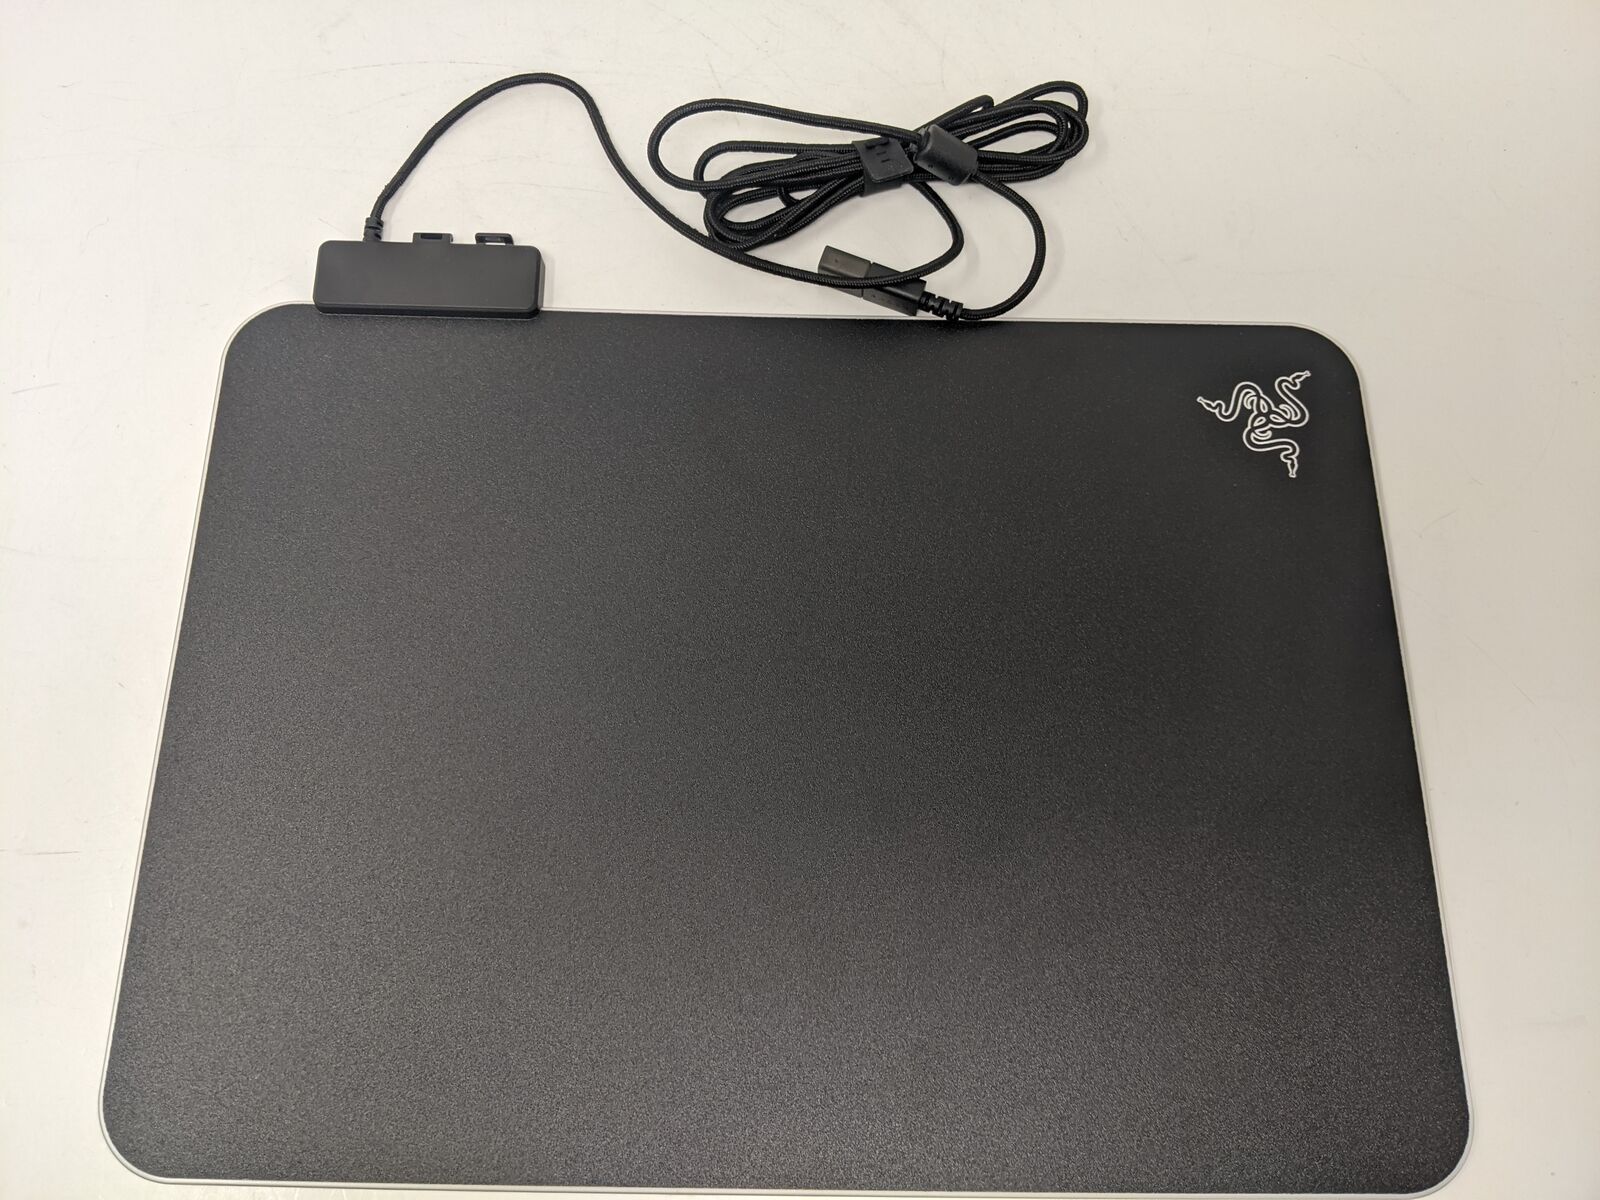  Razer - Firefly V2 Hard Surface Gaming Mouse Pad with Chroma RGB Lighting 7812